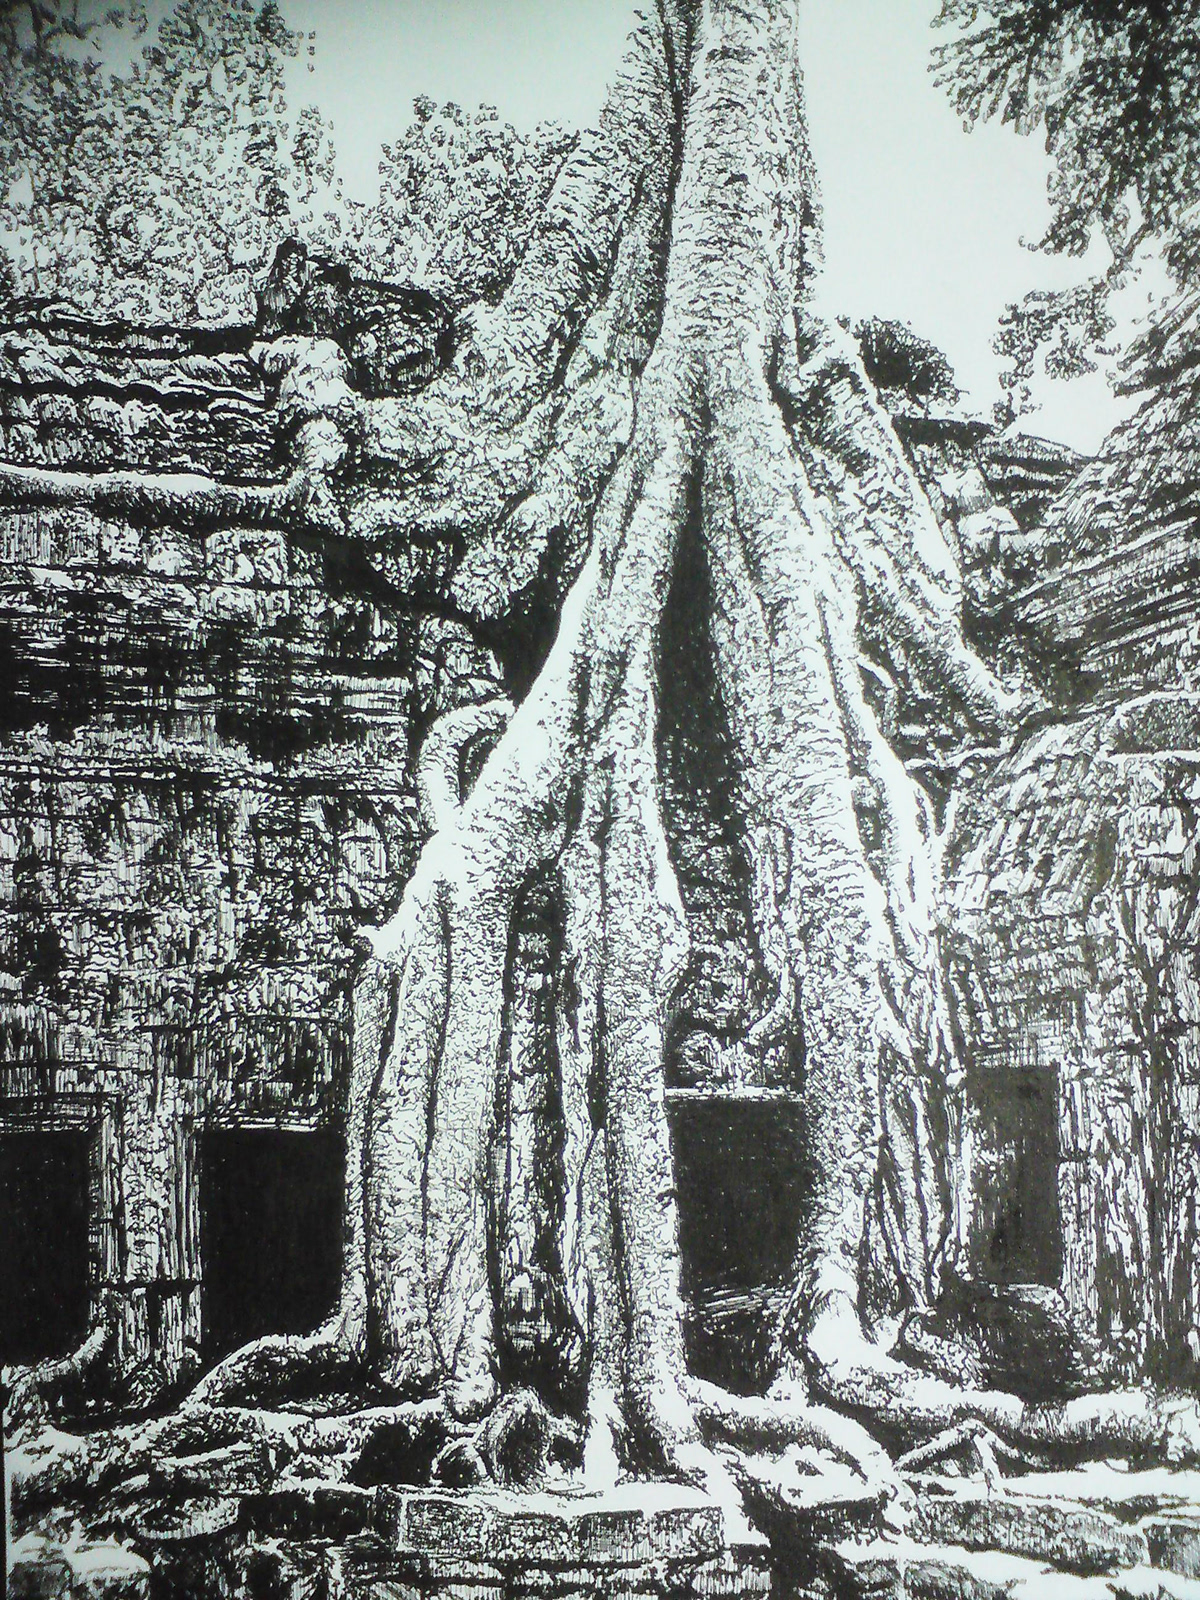 Tree Roots - Preah Khan temple